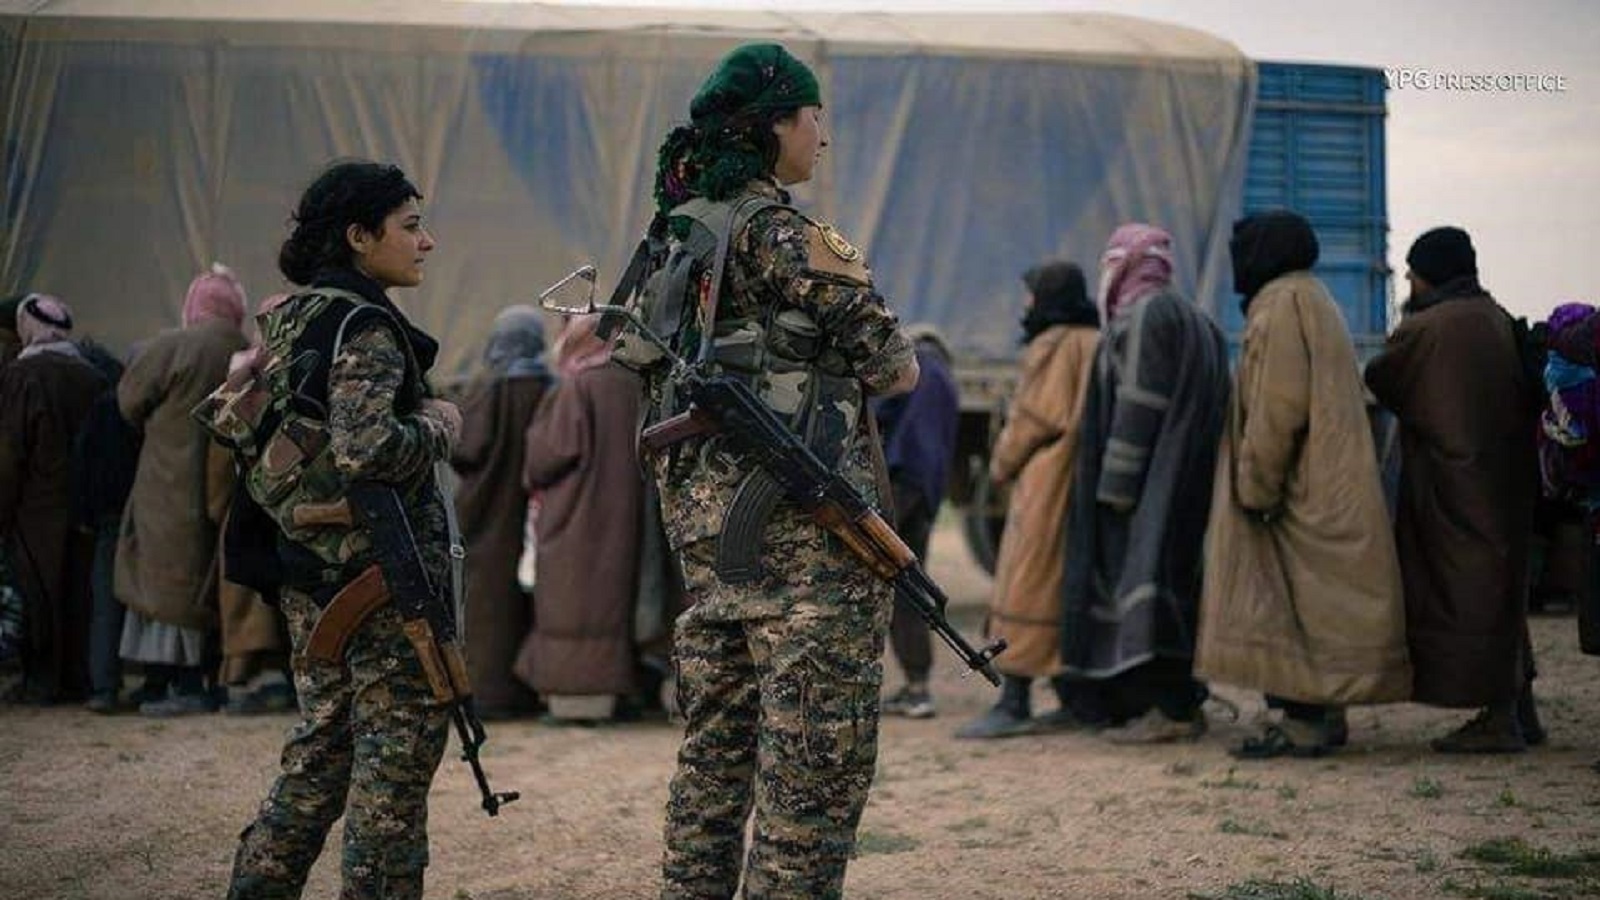 مقاتلات كرديات يقتدن مقاتلي "داعش" بعد استسلامهم